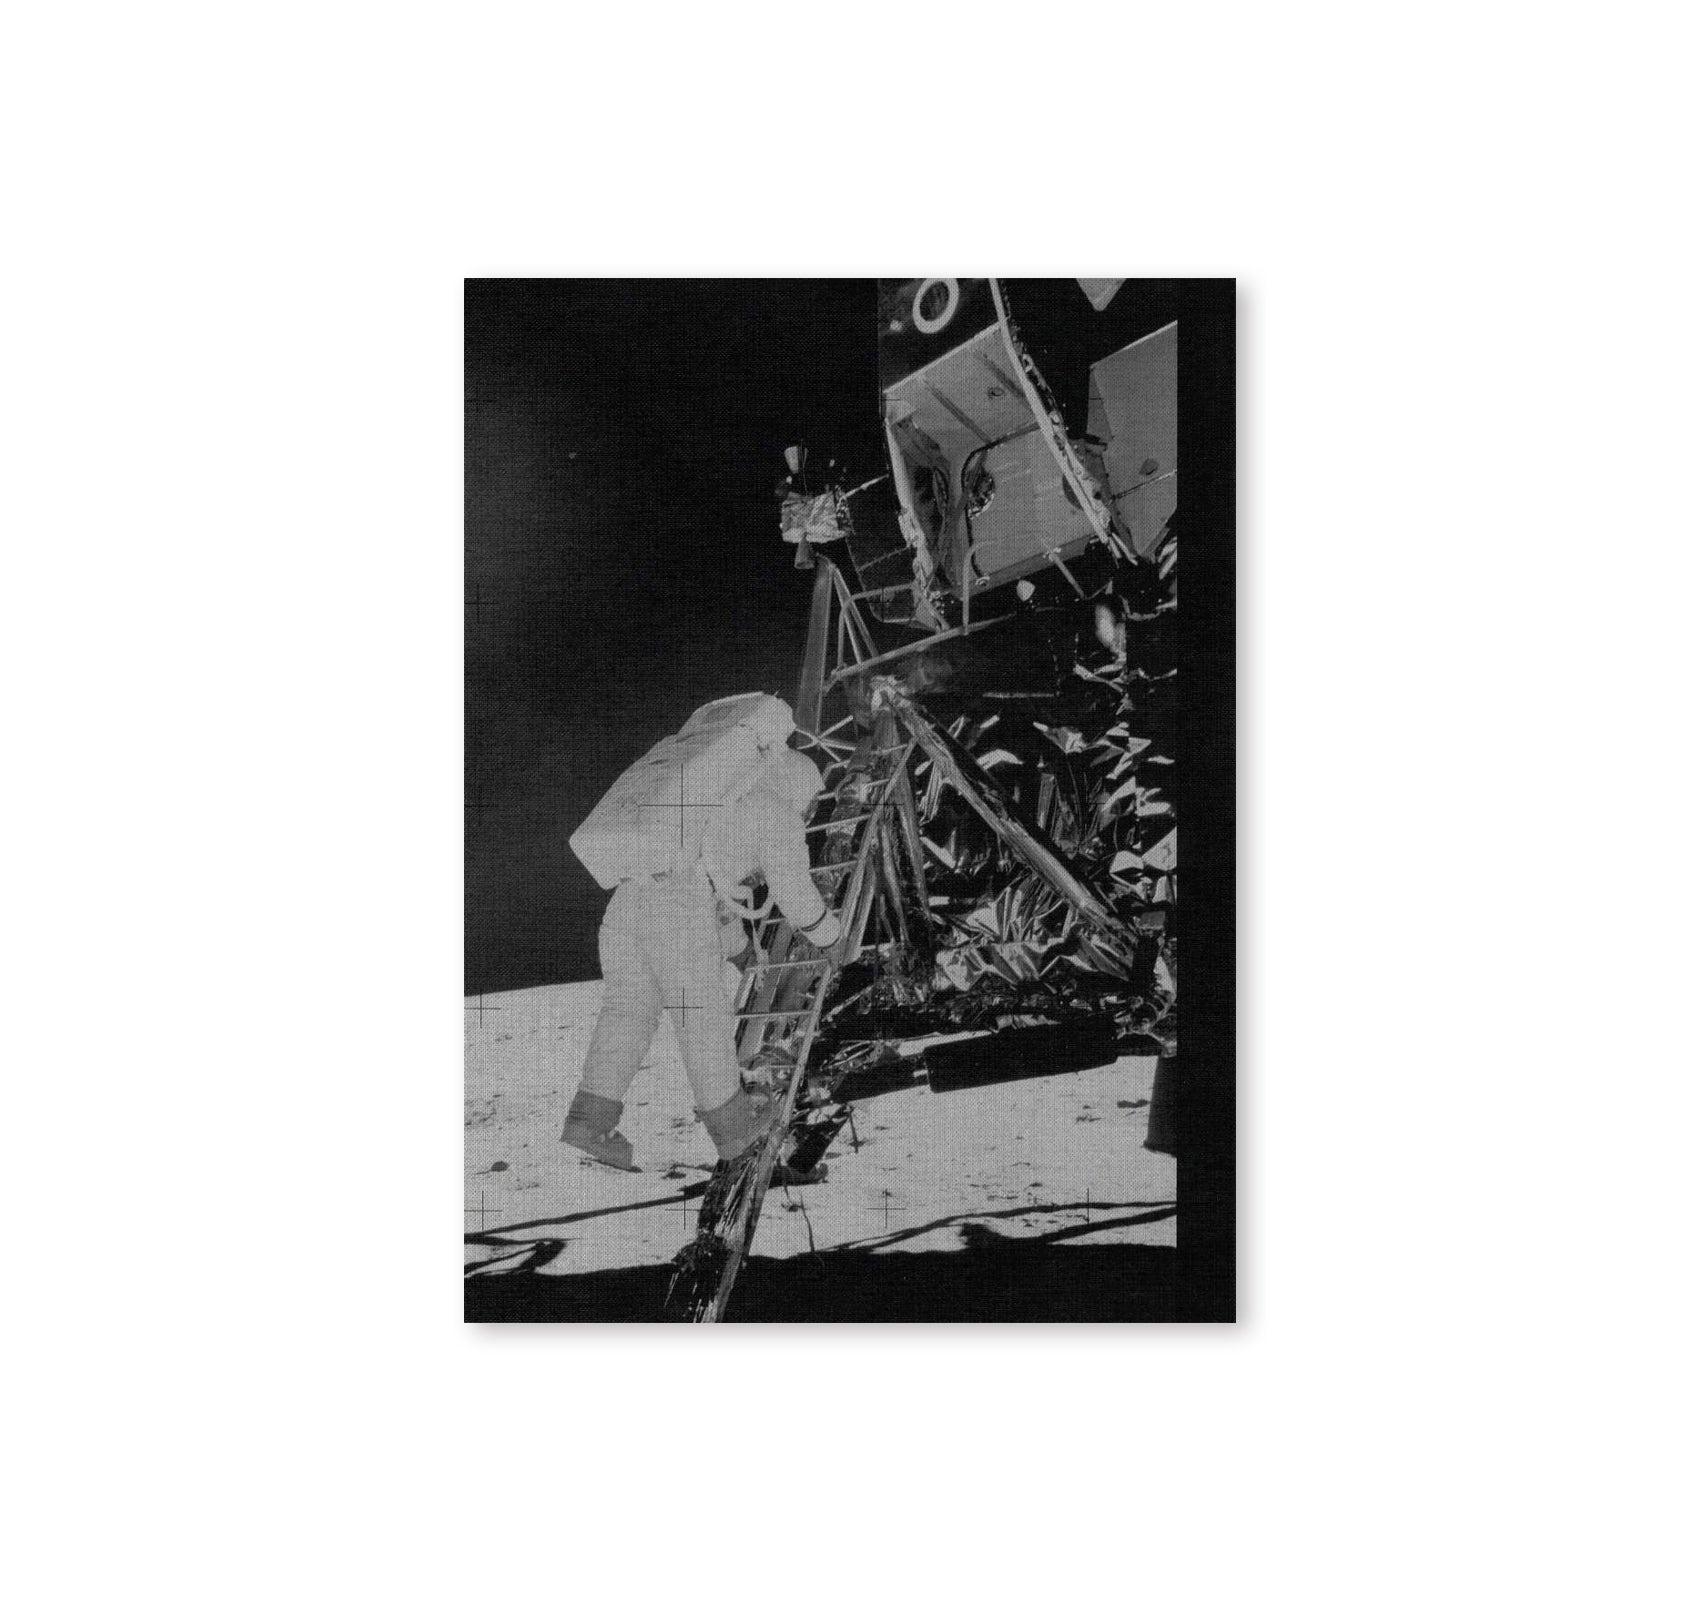 NASA APOLLO 11 – MAN ON THE MOON